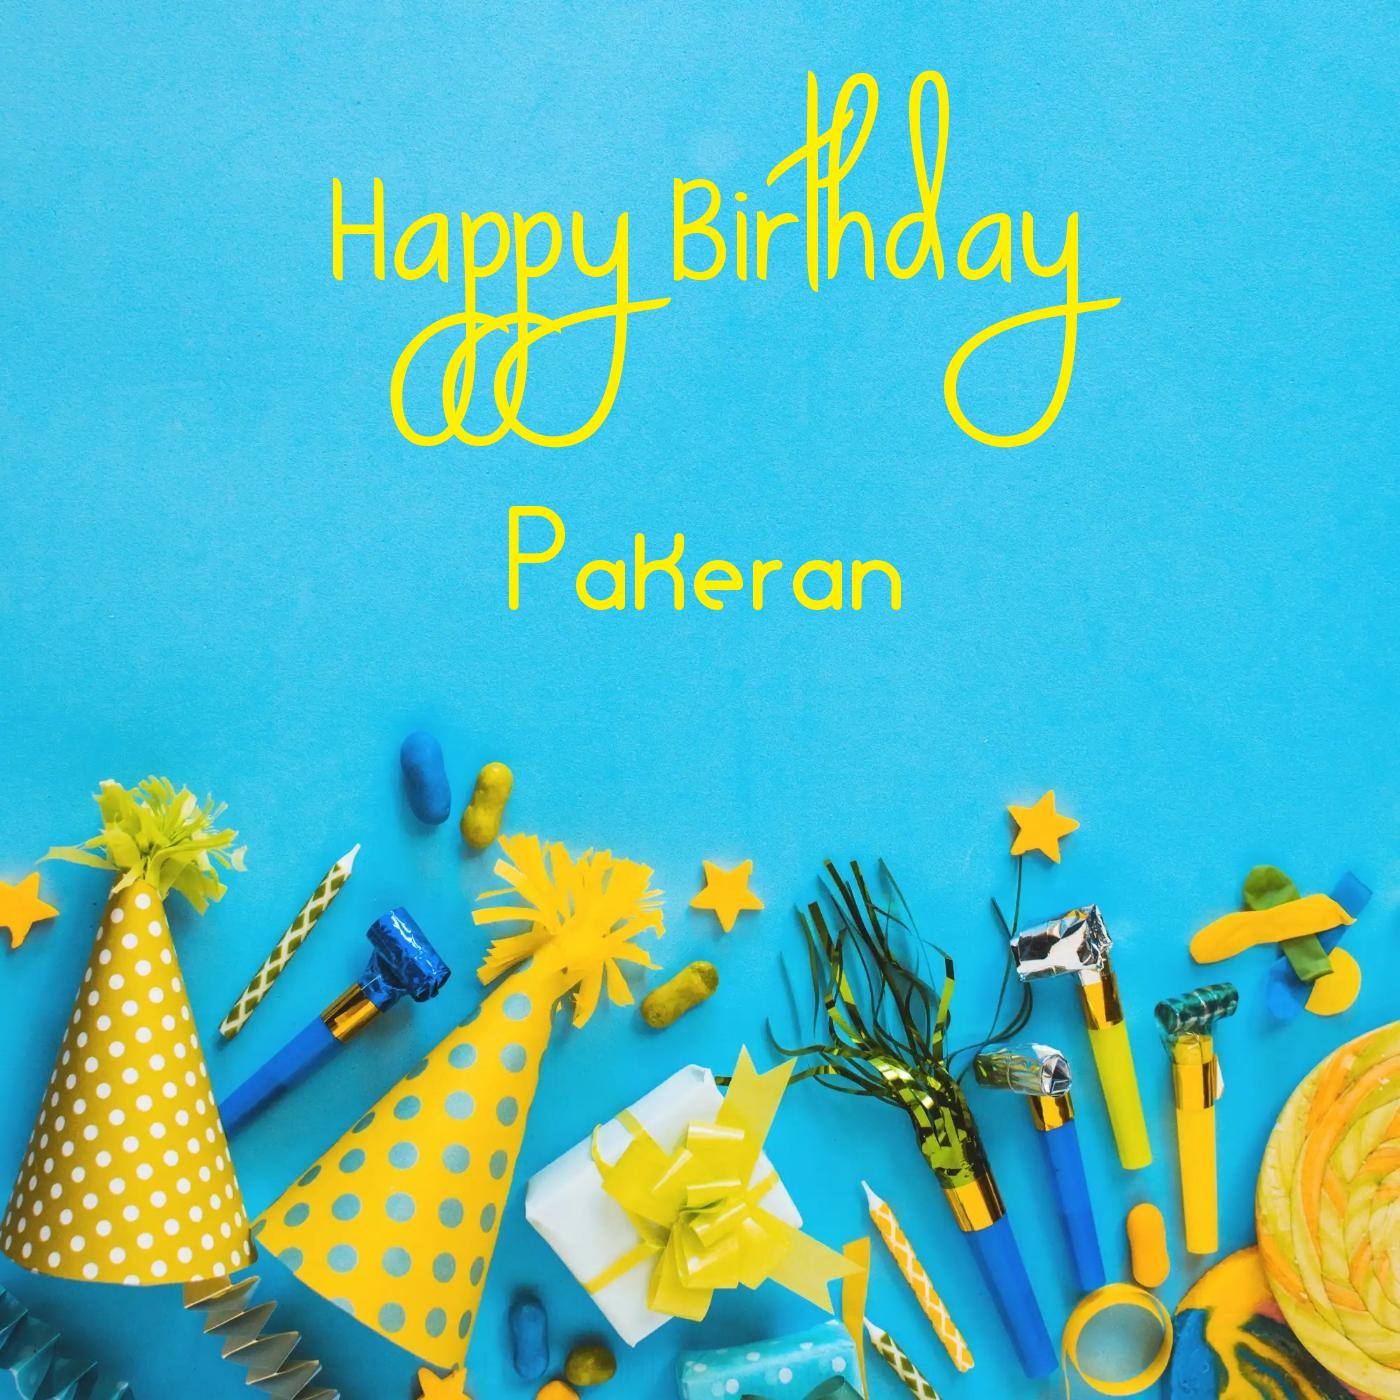 Happy Birthday Pakeran Party Accessories Card